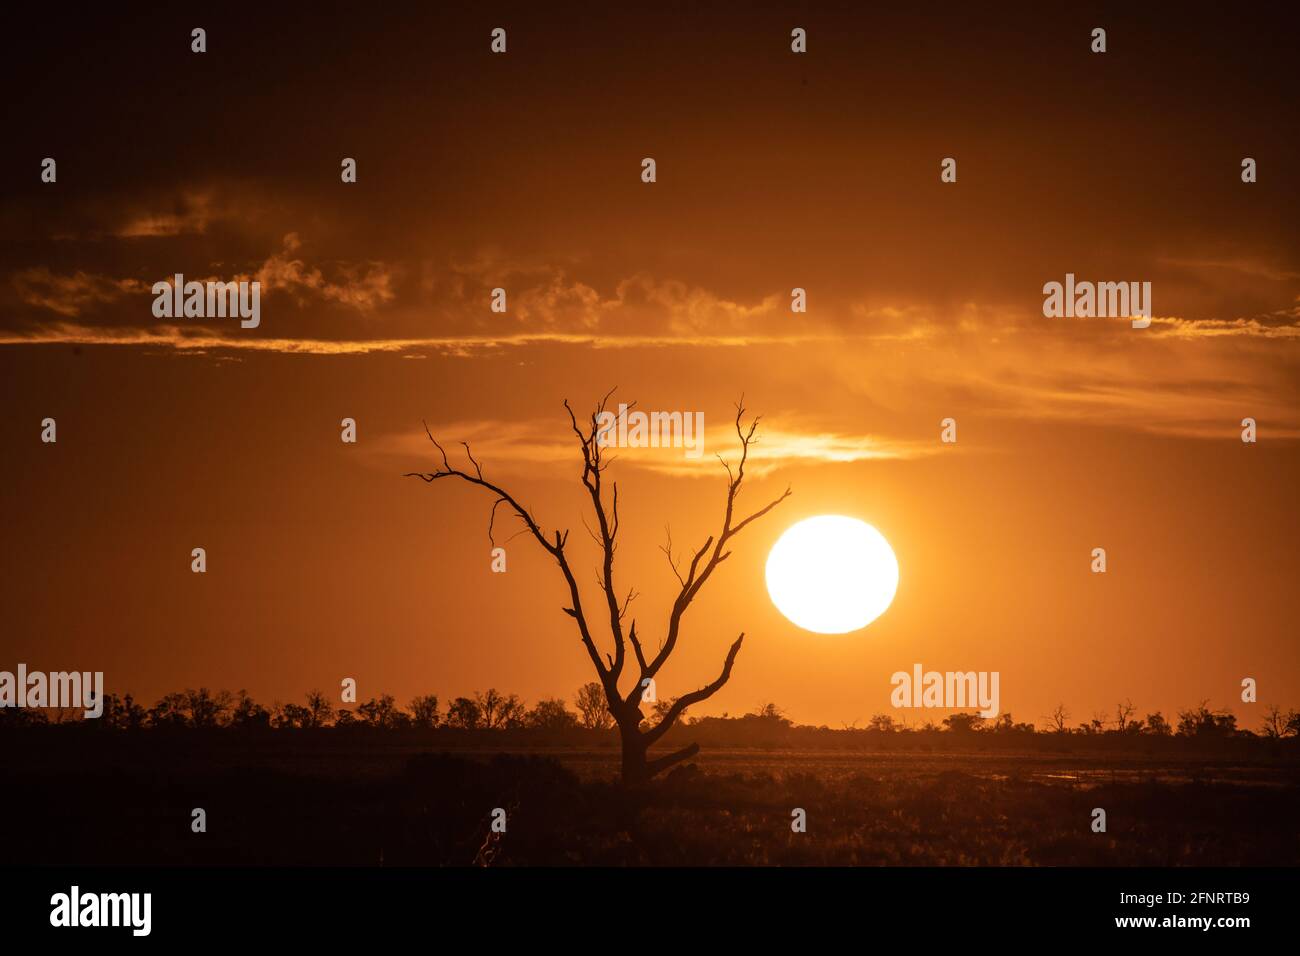 Outback Australia . Dead trees and arid scenes in outback rural Australia . Stock Photo